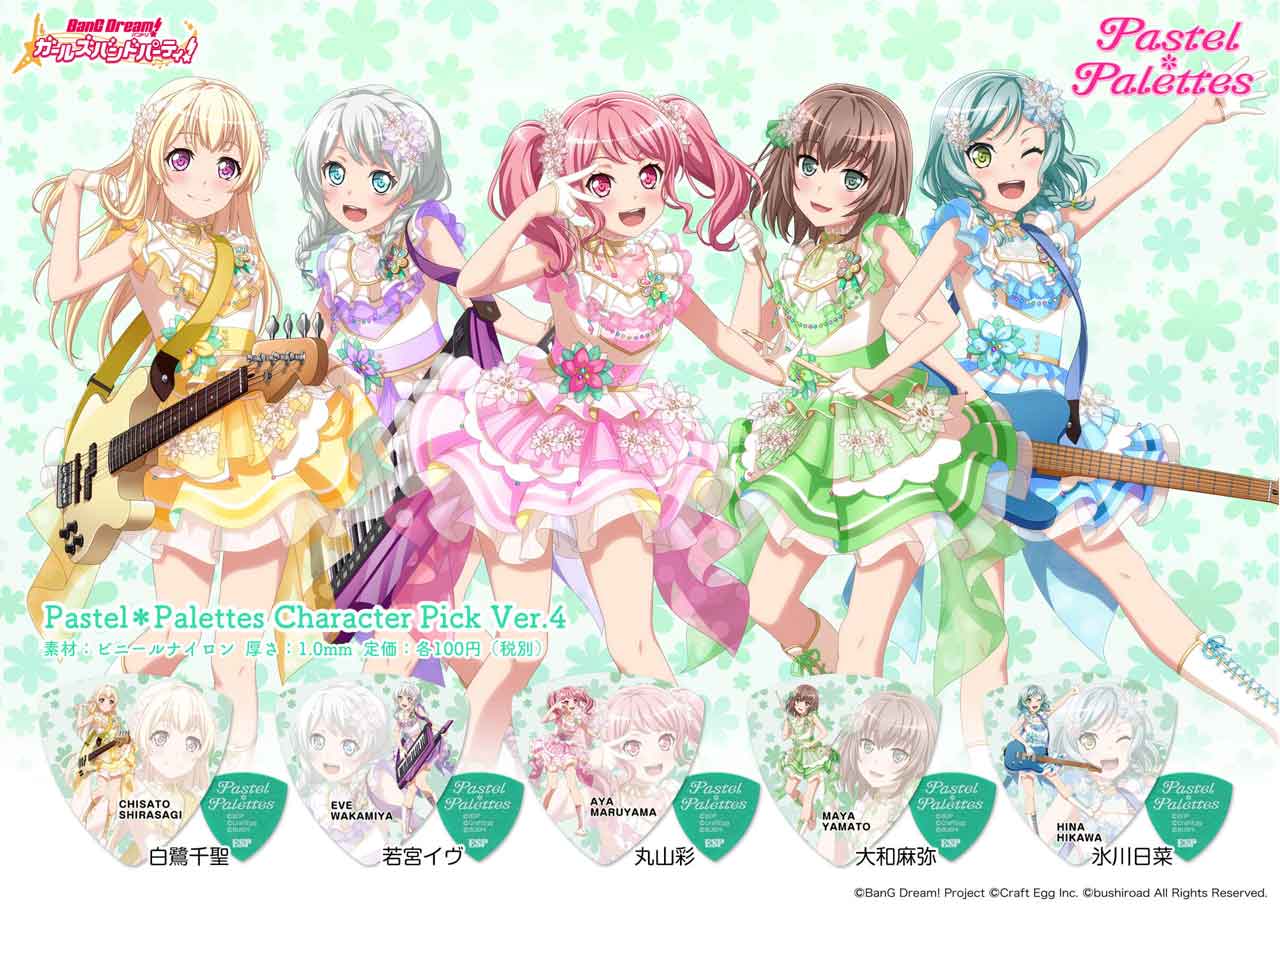 【ESP×BanG Dream!コラボピック】Pastel*Palettes Character Pick Ver.4 "丸山彩"（GBP AYA PASTEL PALETTES 4）＆”ハメパチ” セット